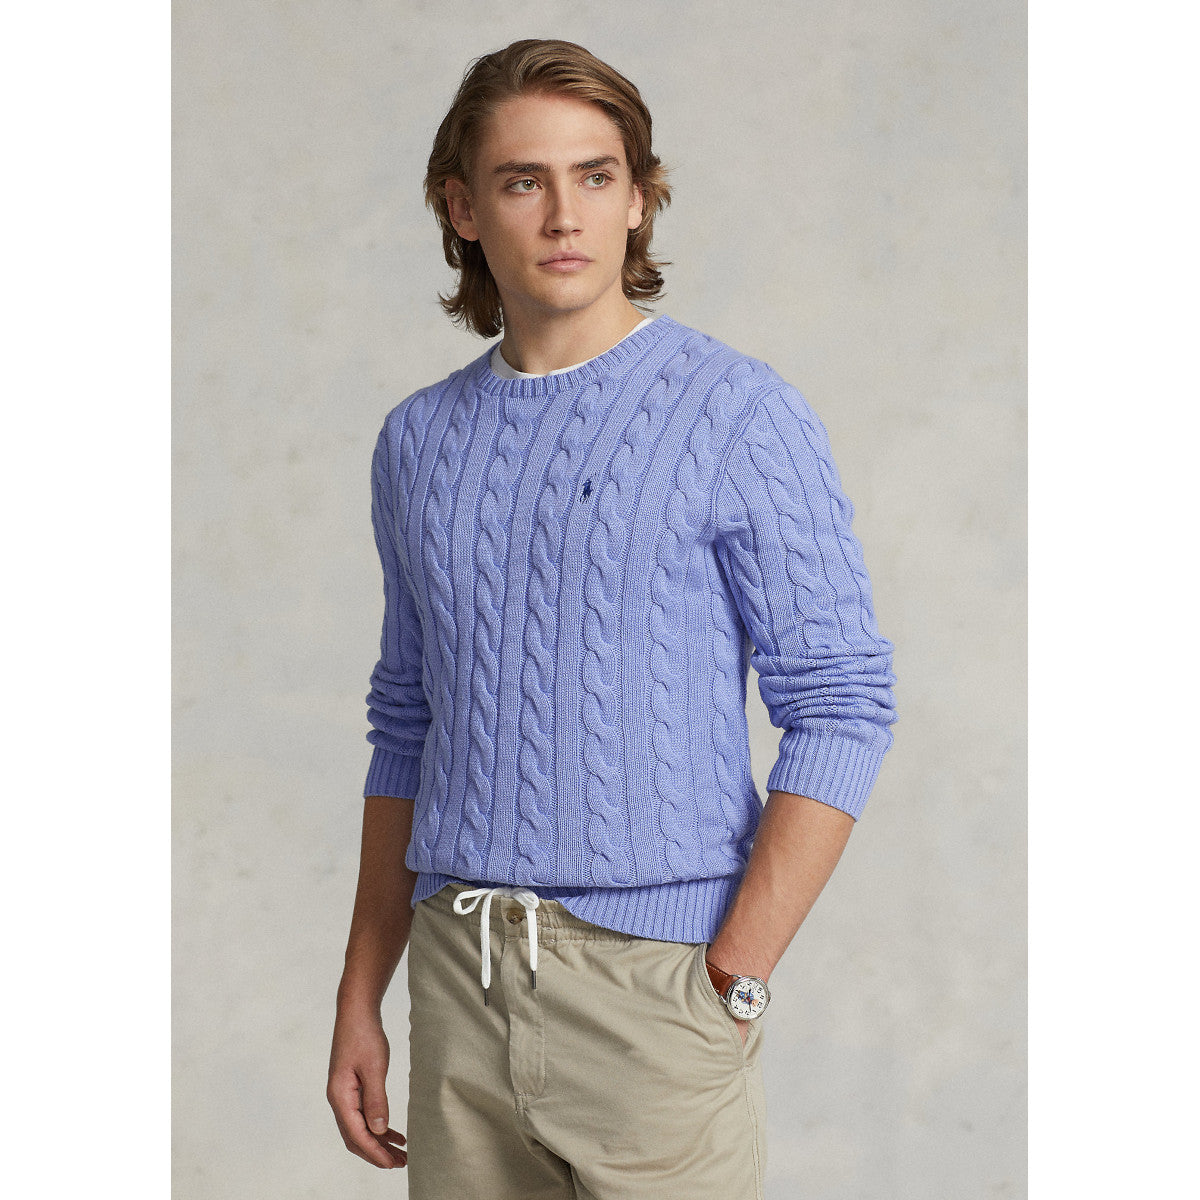 Polo Ralph Lauren Driver LS Sweater 043 Lafayette Blue